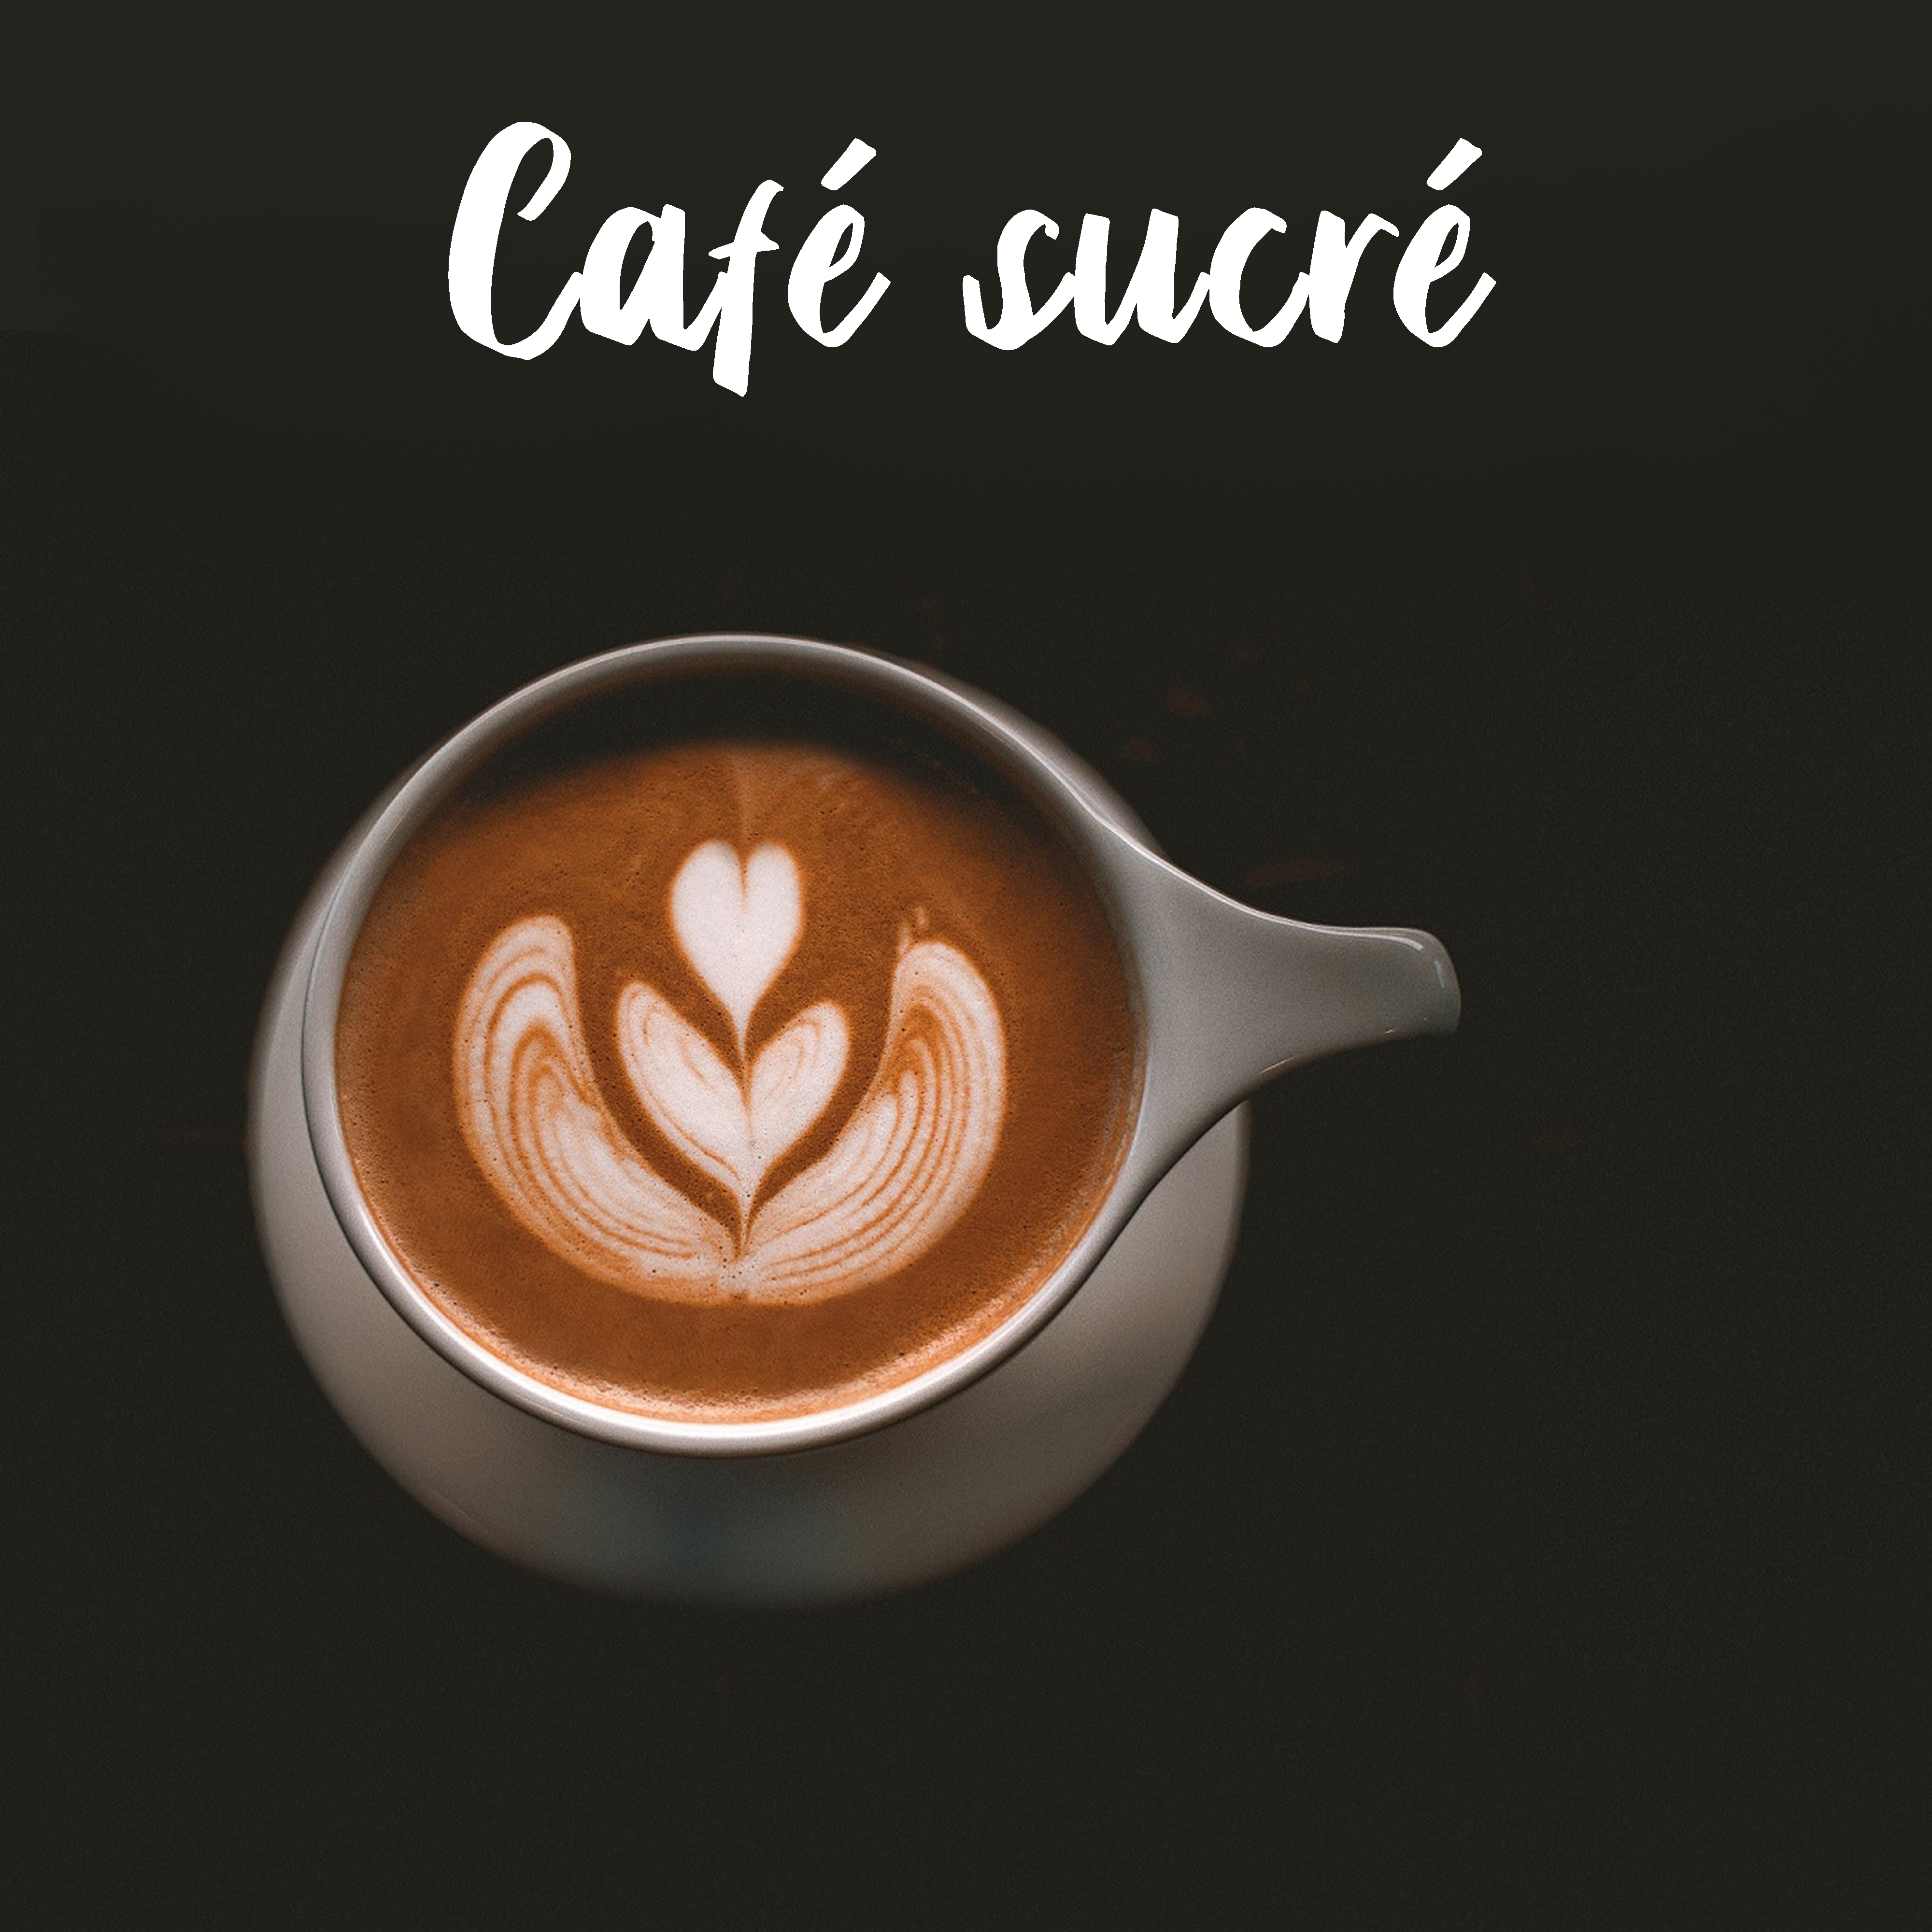 Cafe sucre